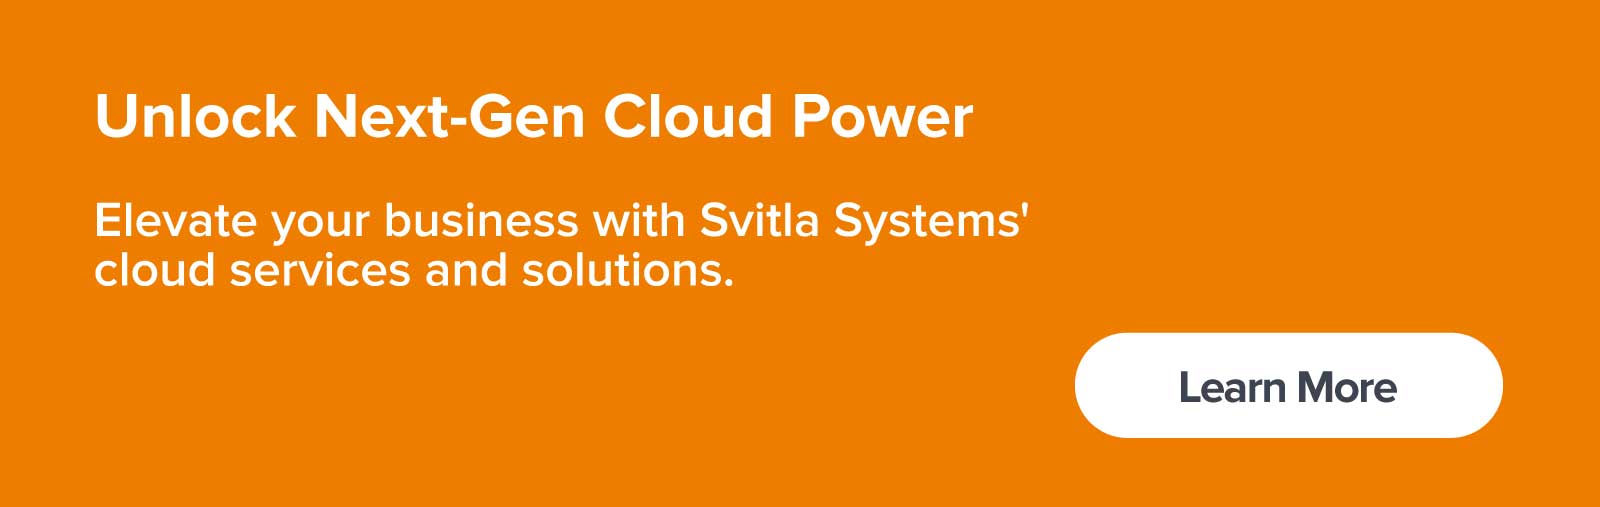 Svitla Systems Cloud migration